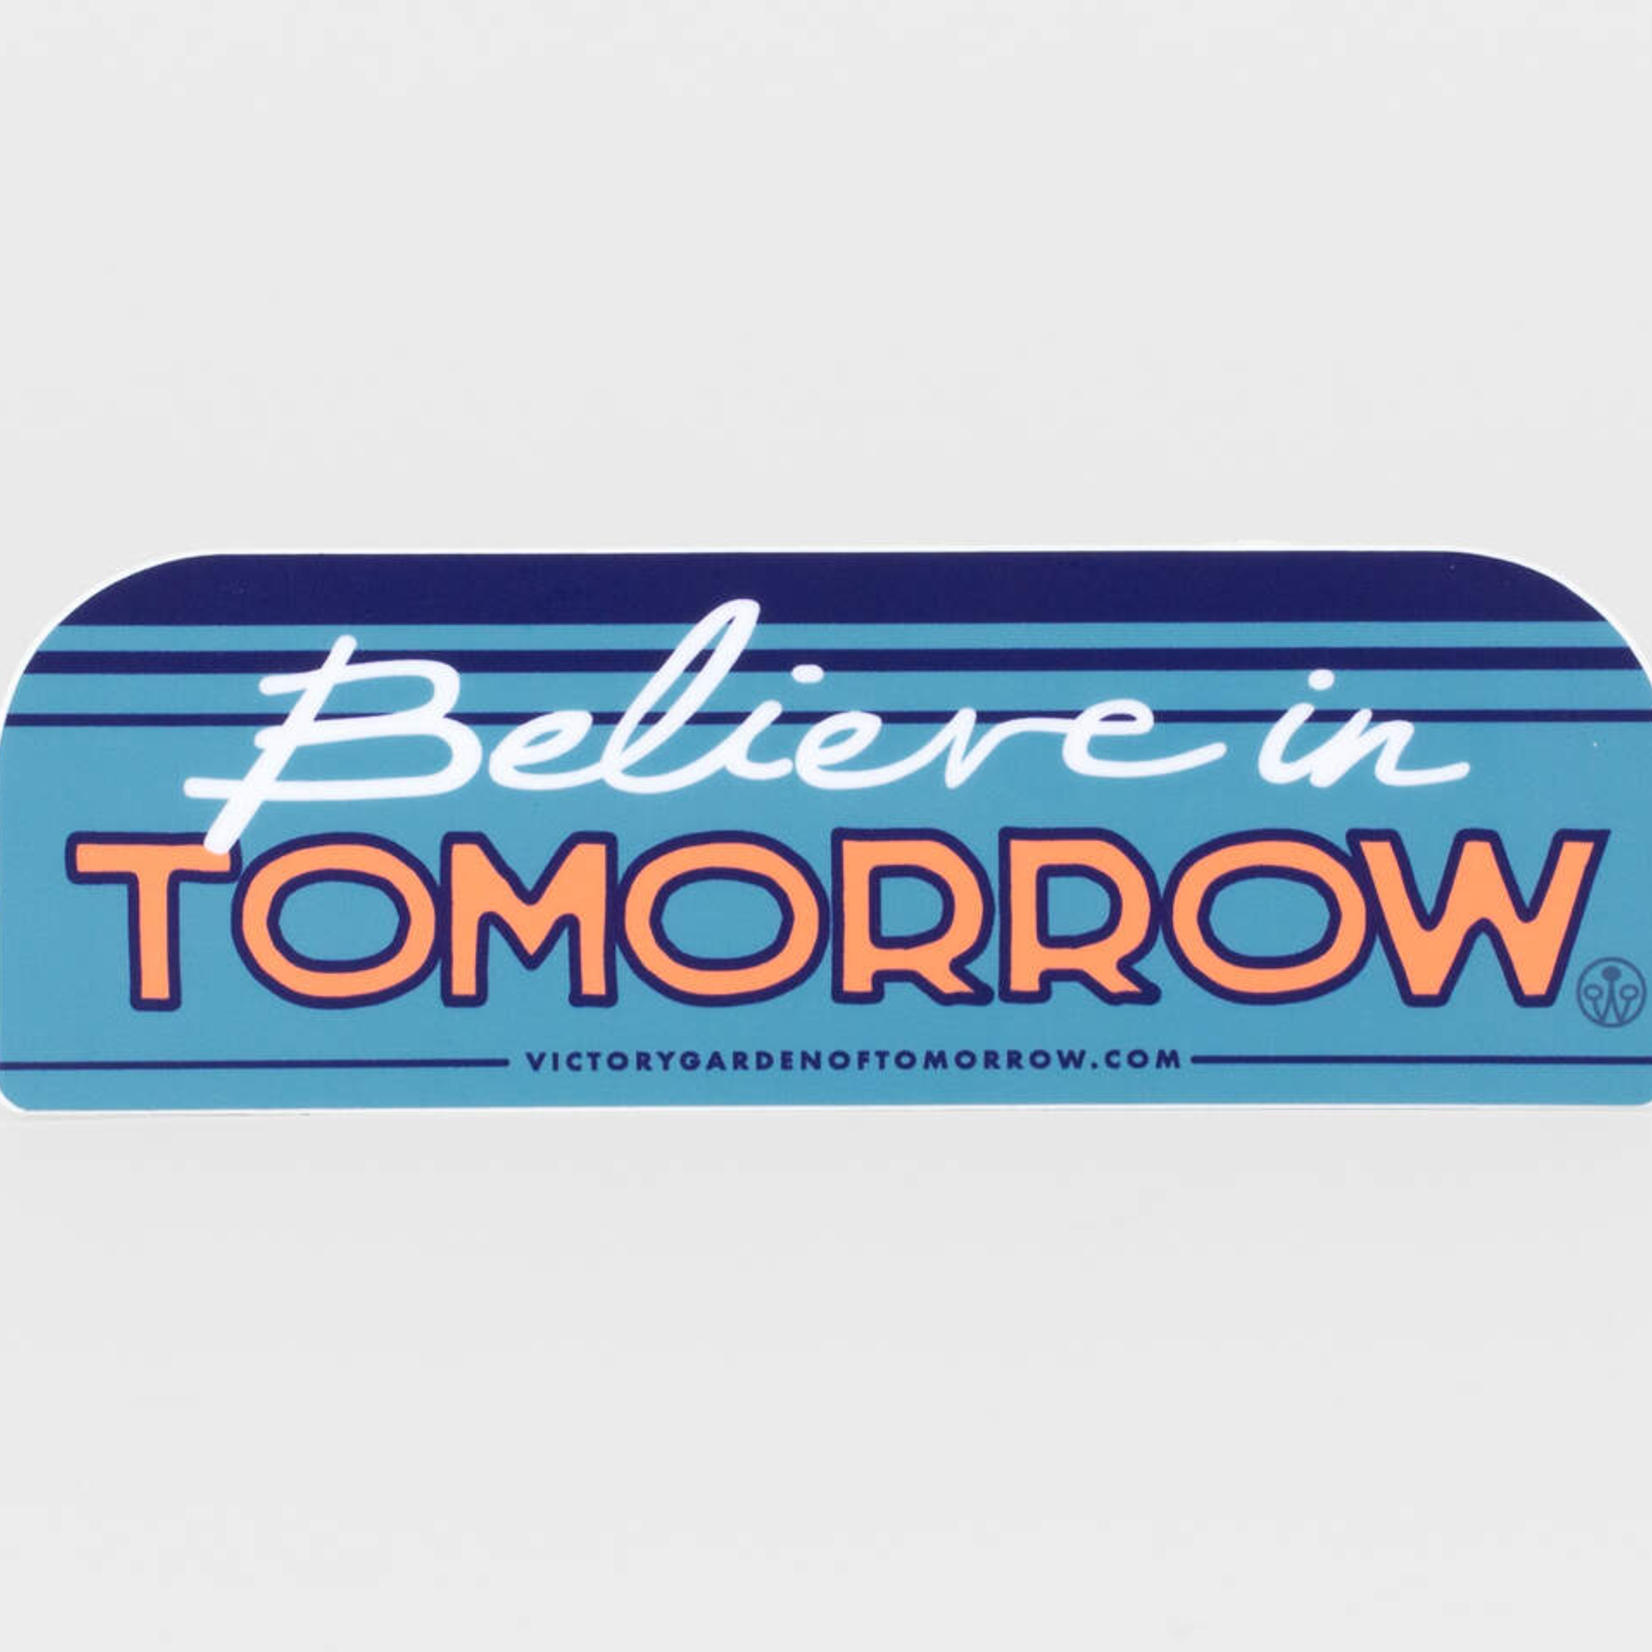 The Victory Garden of Tomorrow Believe In Tomorrow Sticker